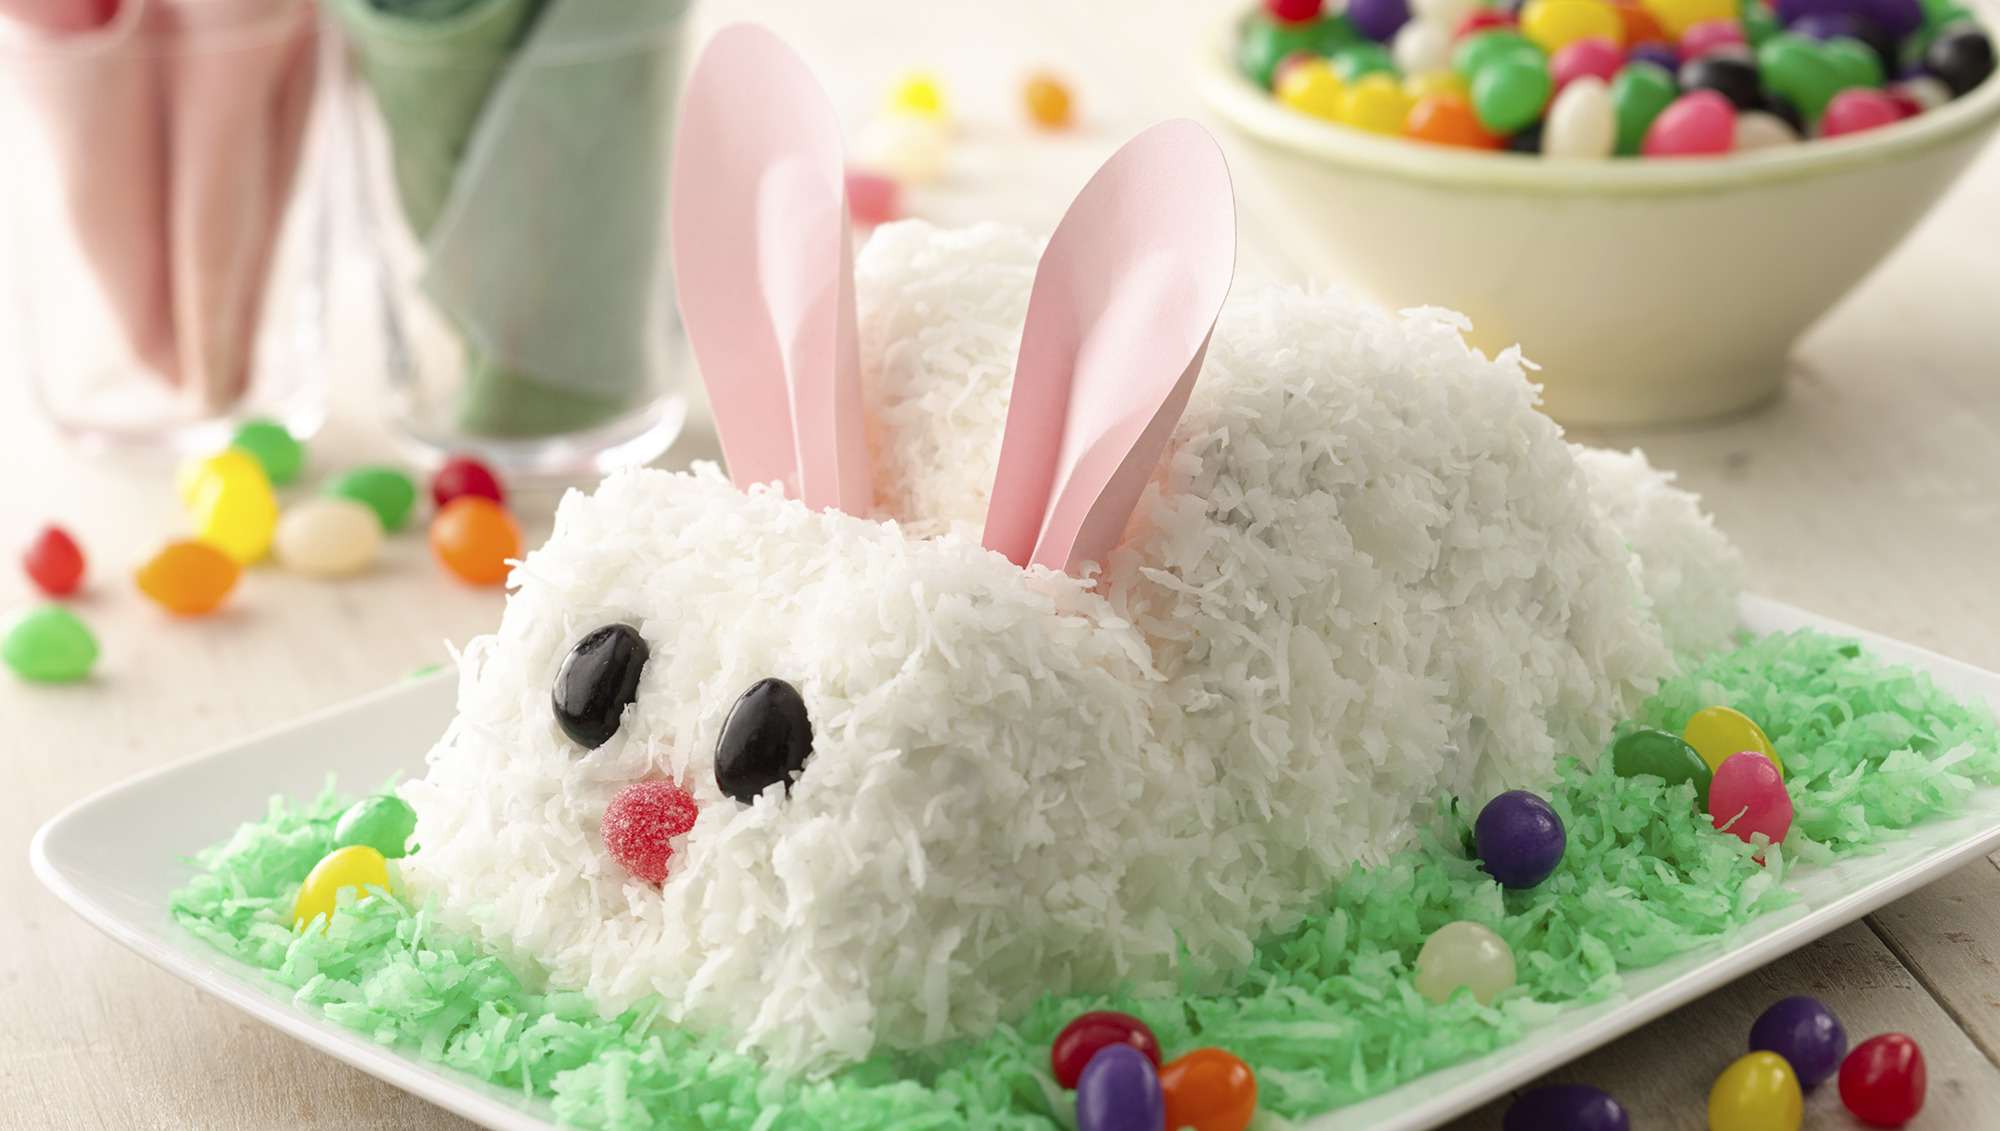 Easter Bunny Cake - Preppy Kitchen